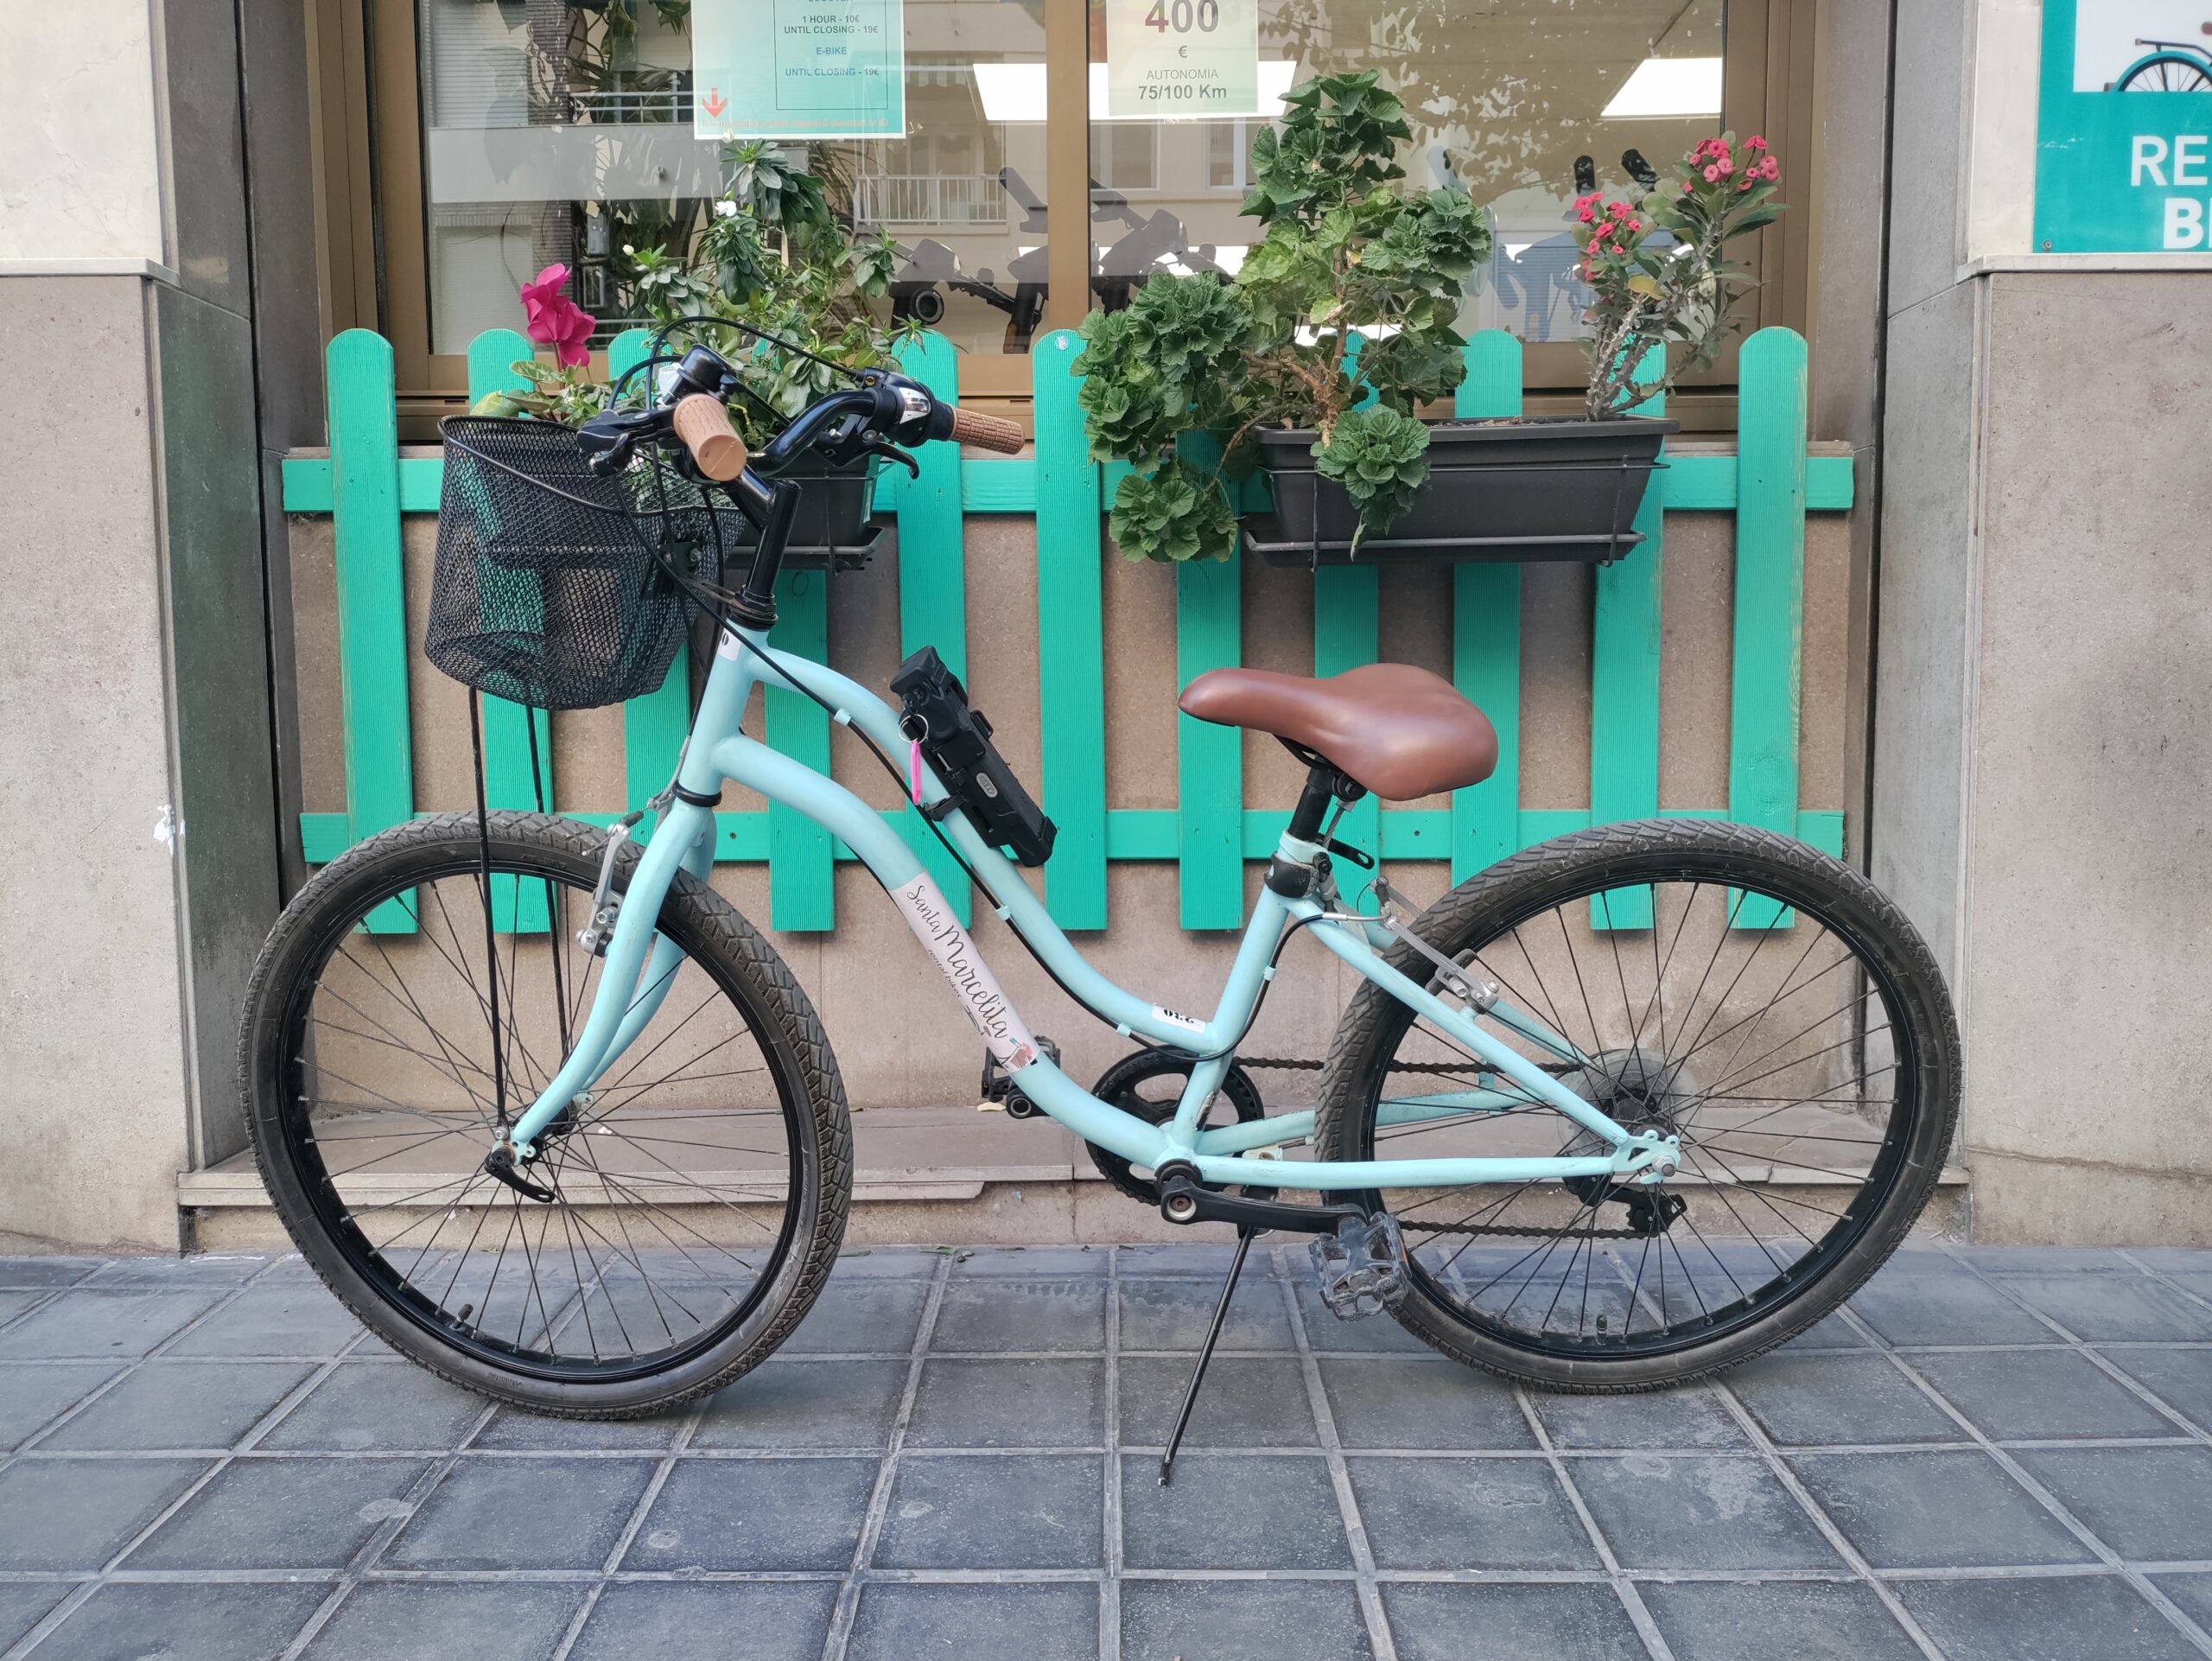 alquiler de bicicletas en valencia - bici de chica